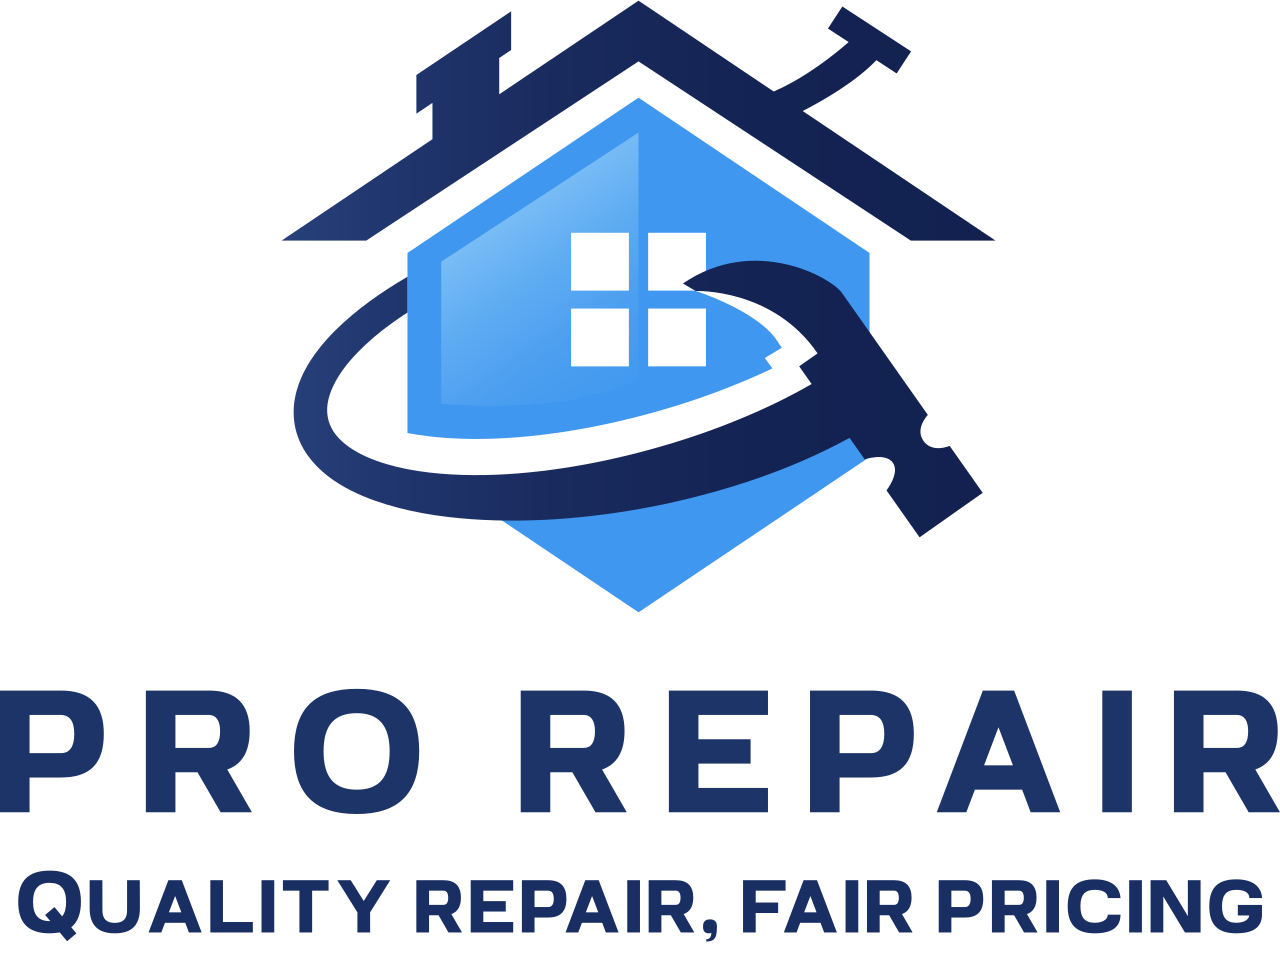 Pro Repair's logo